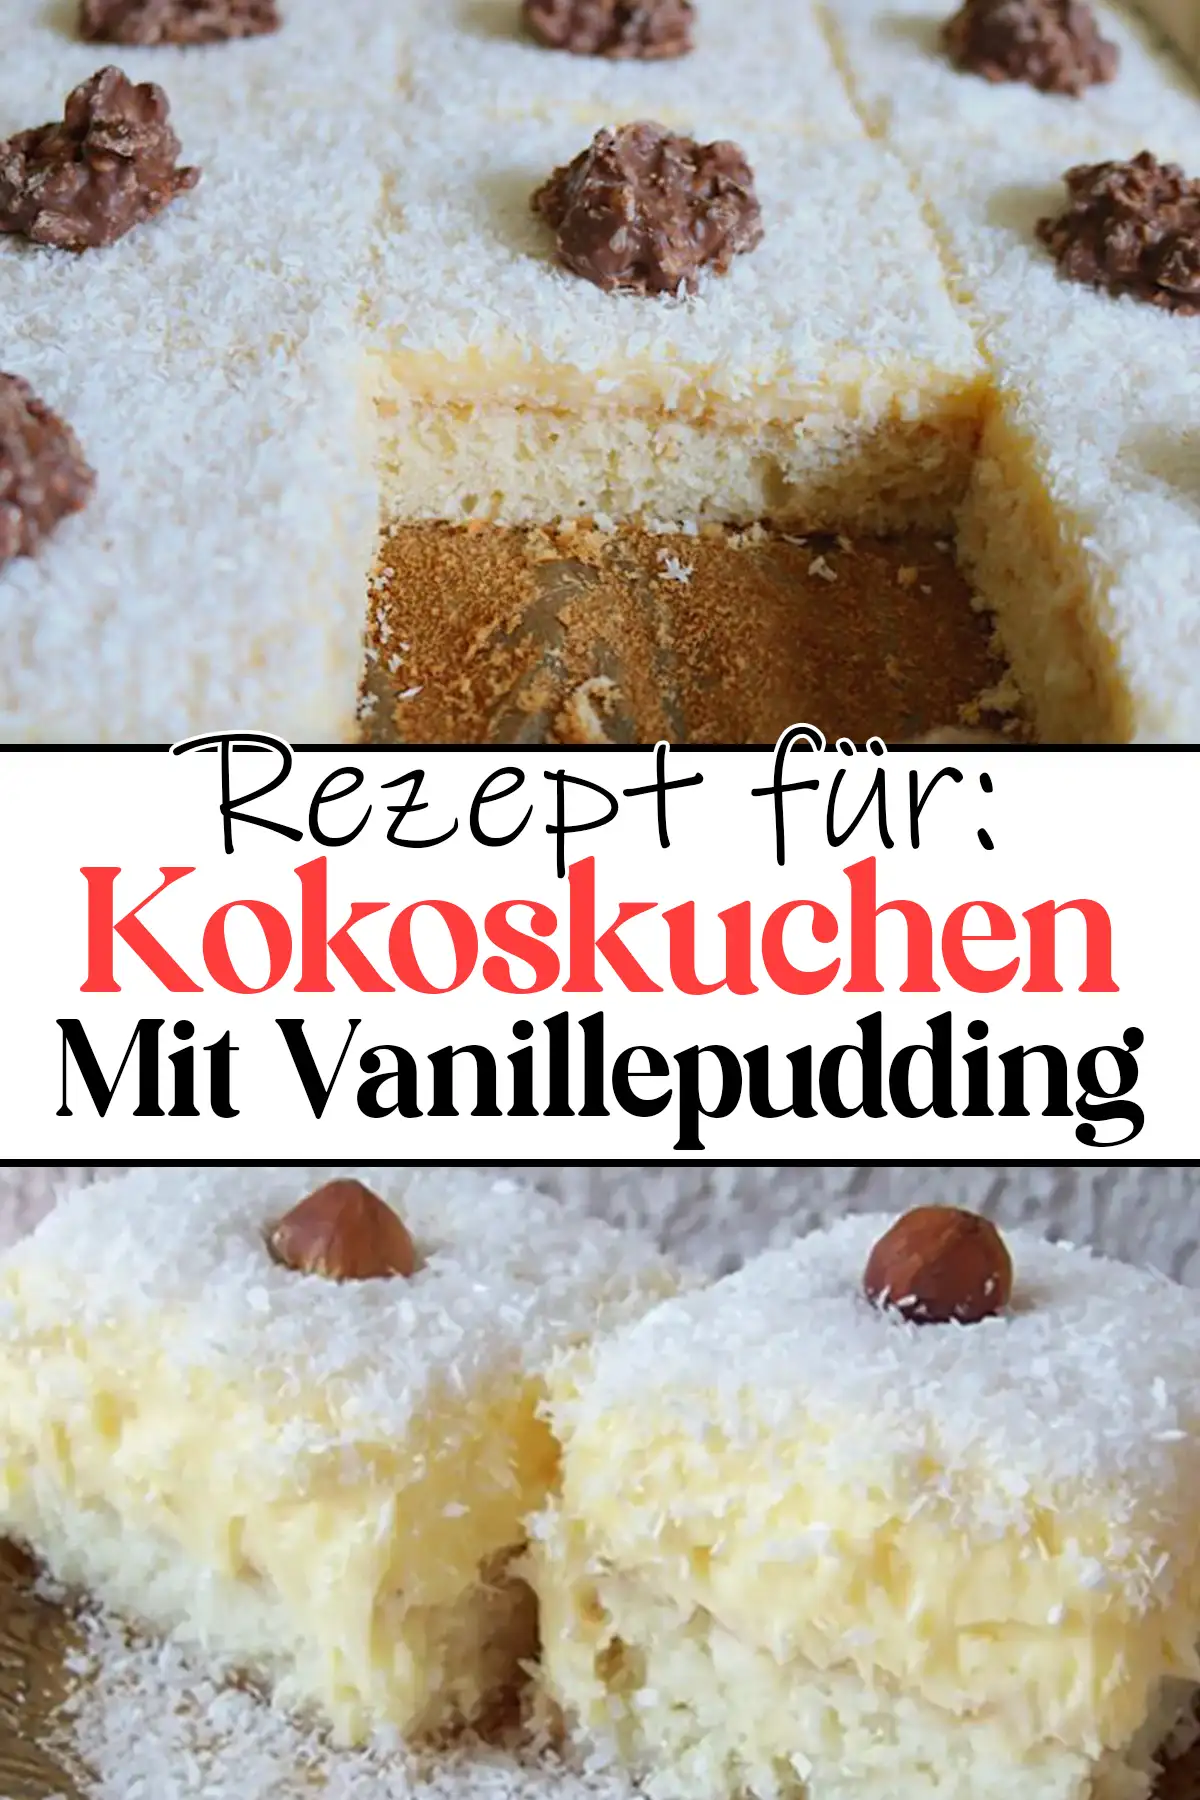 Kokoskuchen Mit Vanillepudding, Blitzschnell & Lecker Rezept